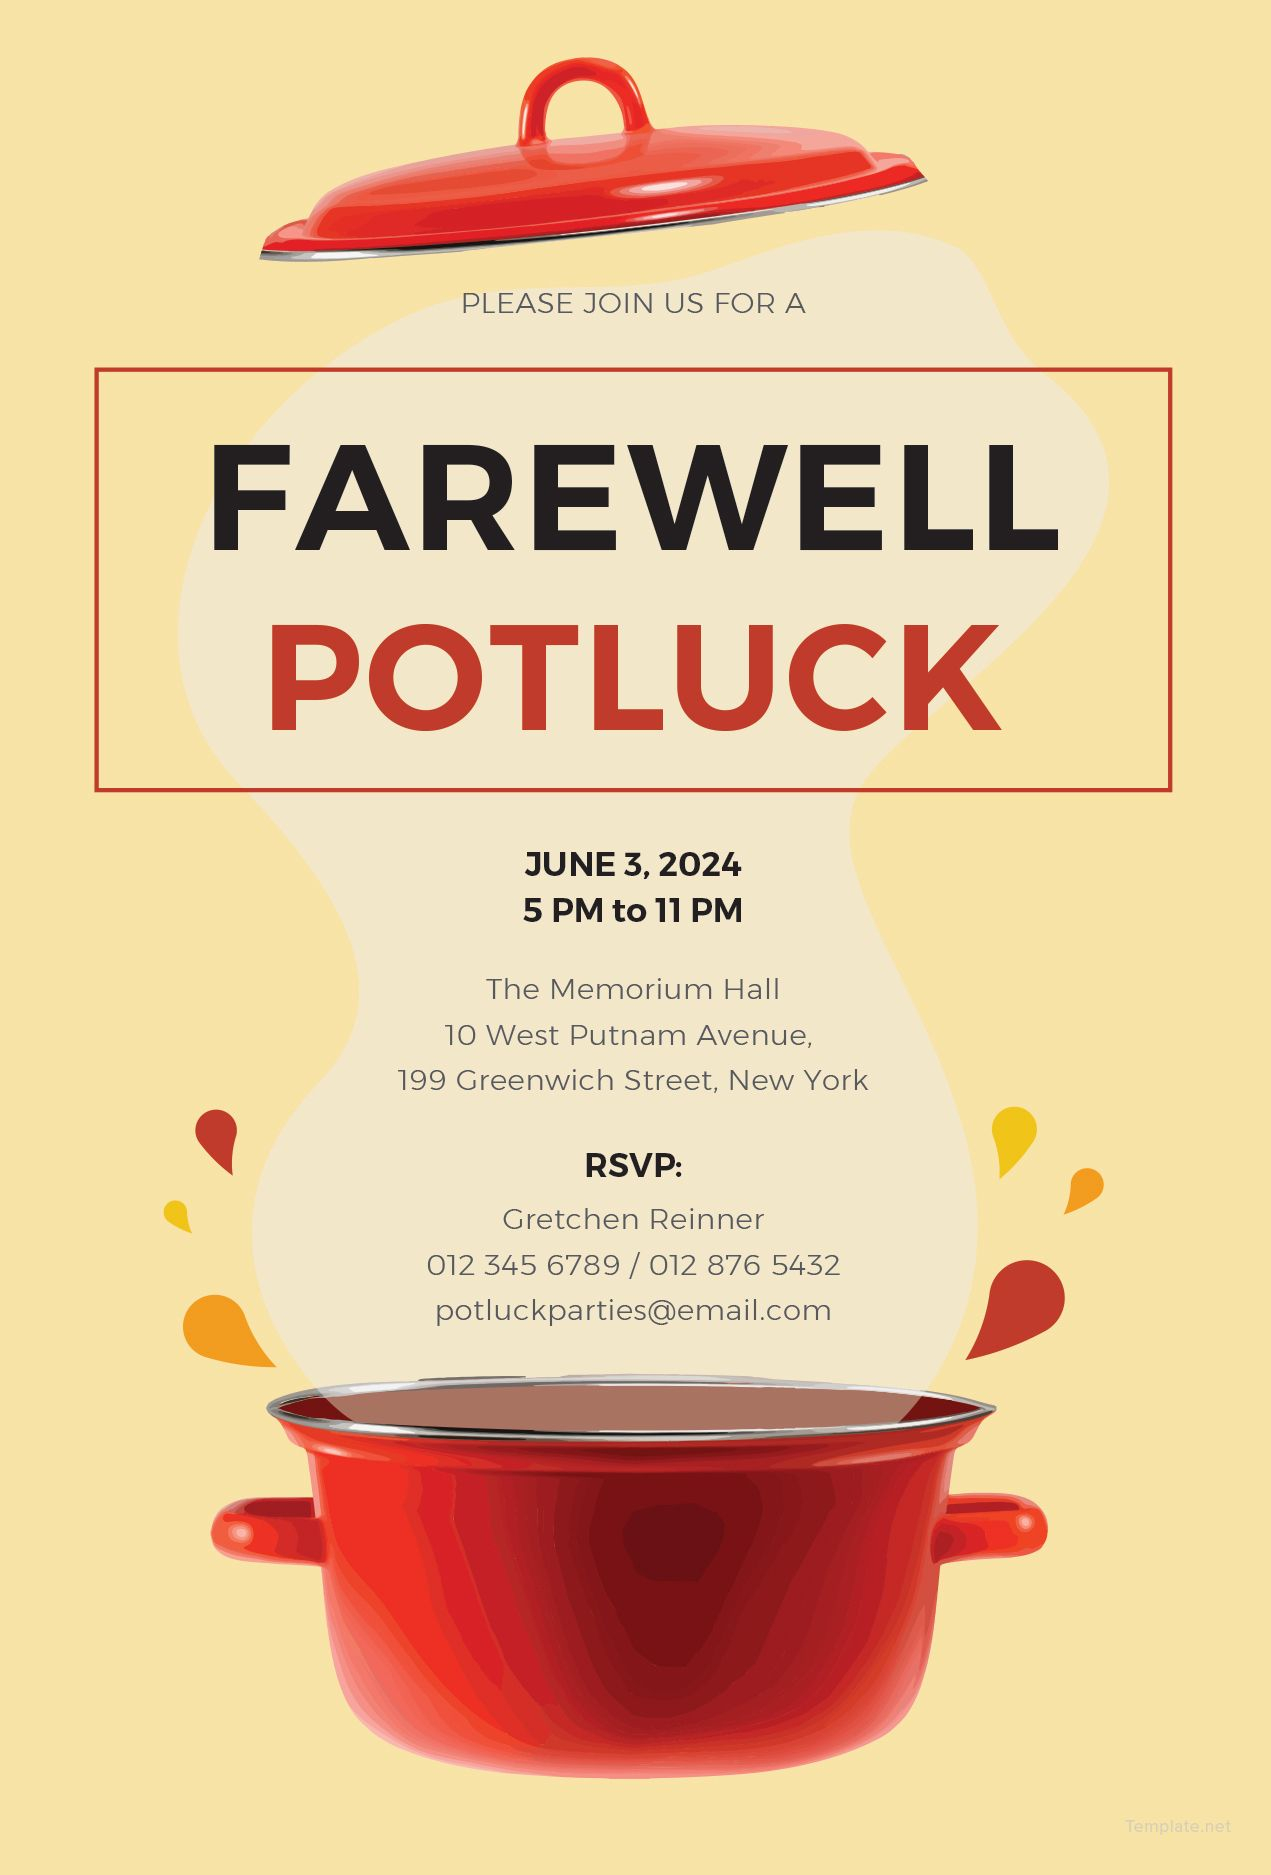 Free Farewell Potluck Invitation Just Cool Potluck Invitation inside sizing 1271 X 1875